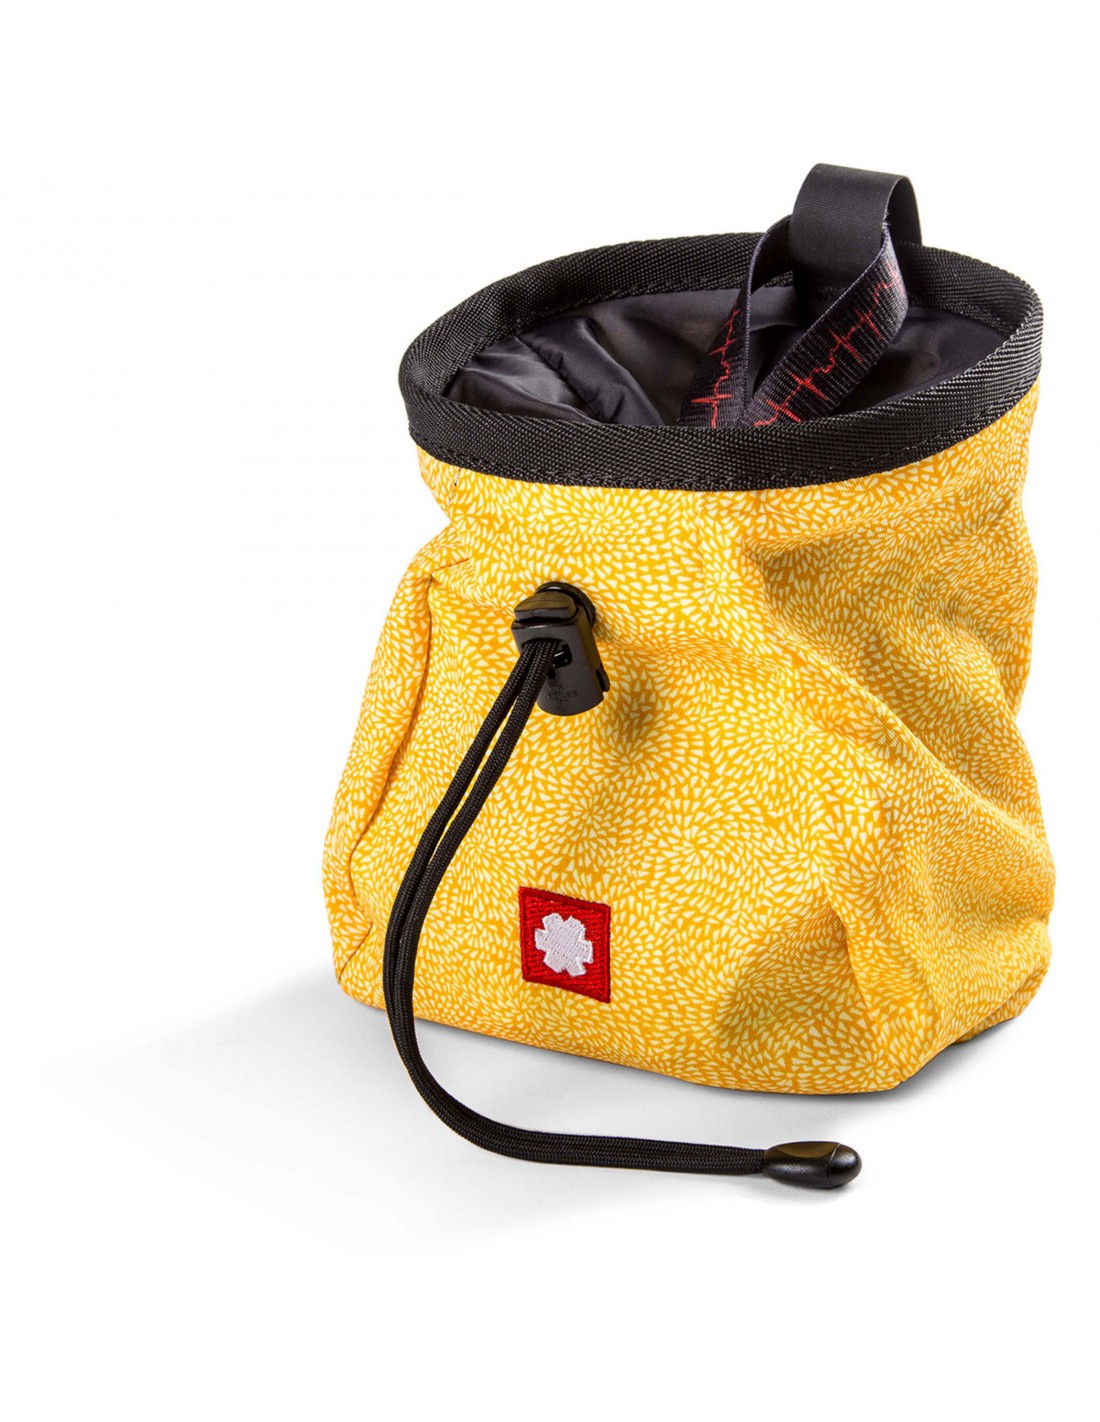 Ocun Chalkbag Lucky + Belt, drops yellow Chalkbag Verwendung - Klettern, Chalkbag Farbe - Gelb, von Ocun